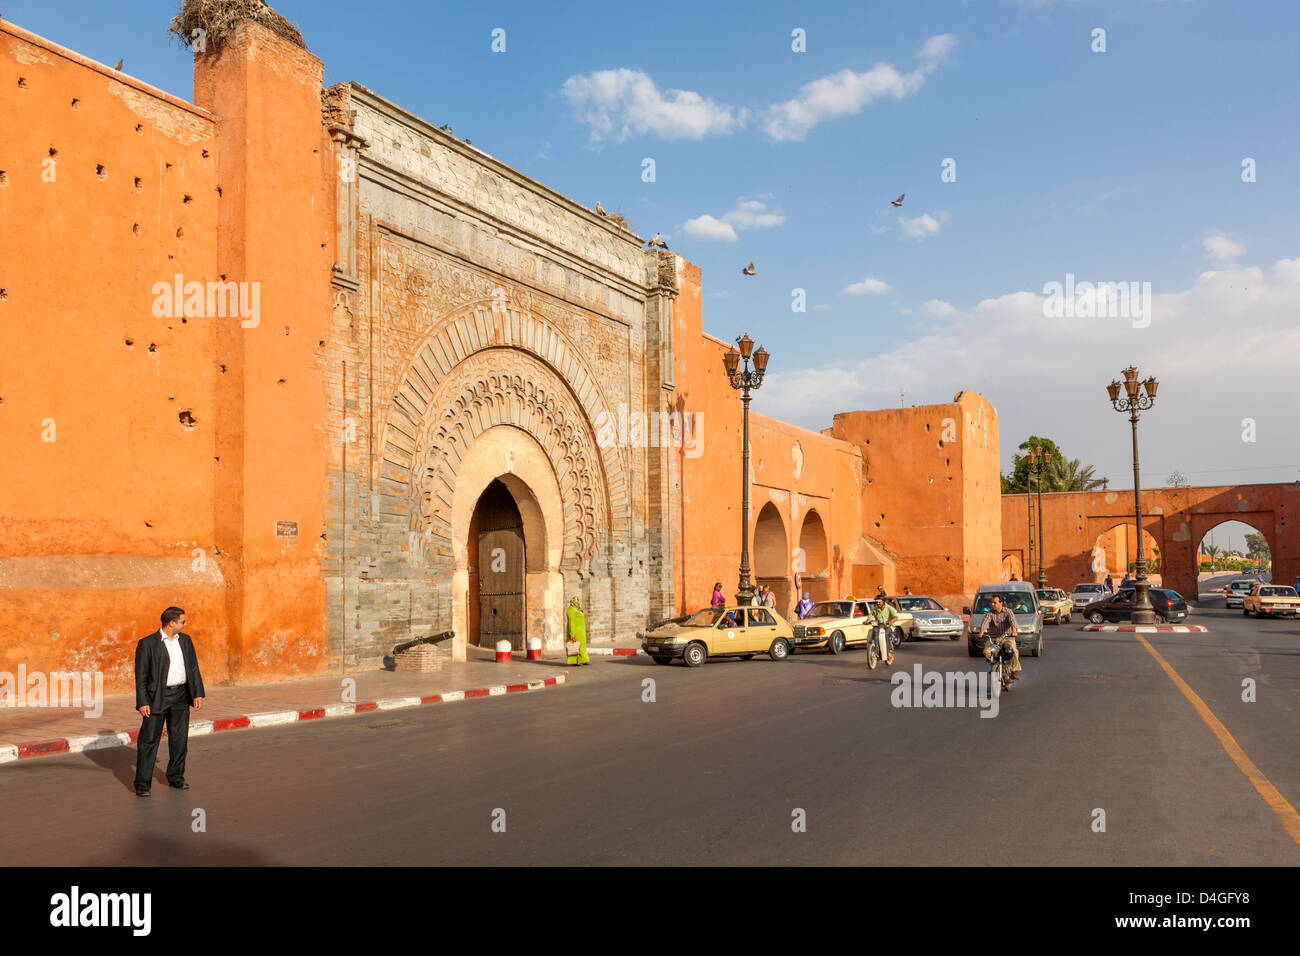 The Bab Agnaou city gate, Marrakesh, Morocco, North Africa. Stock Photo